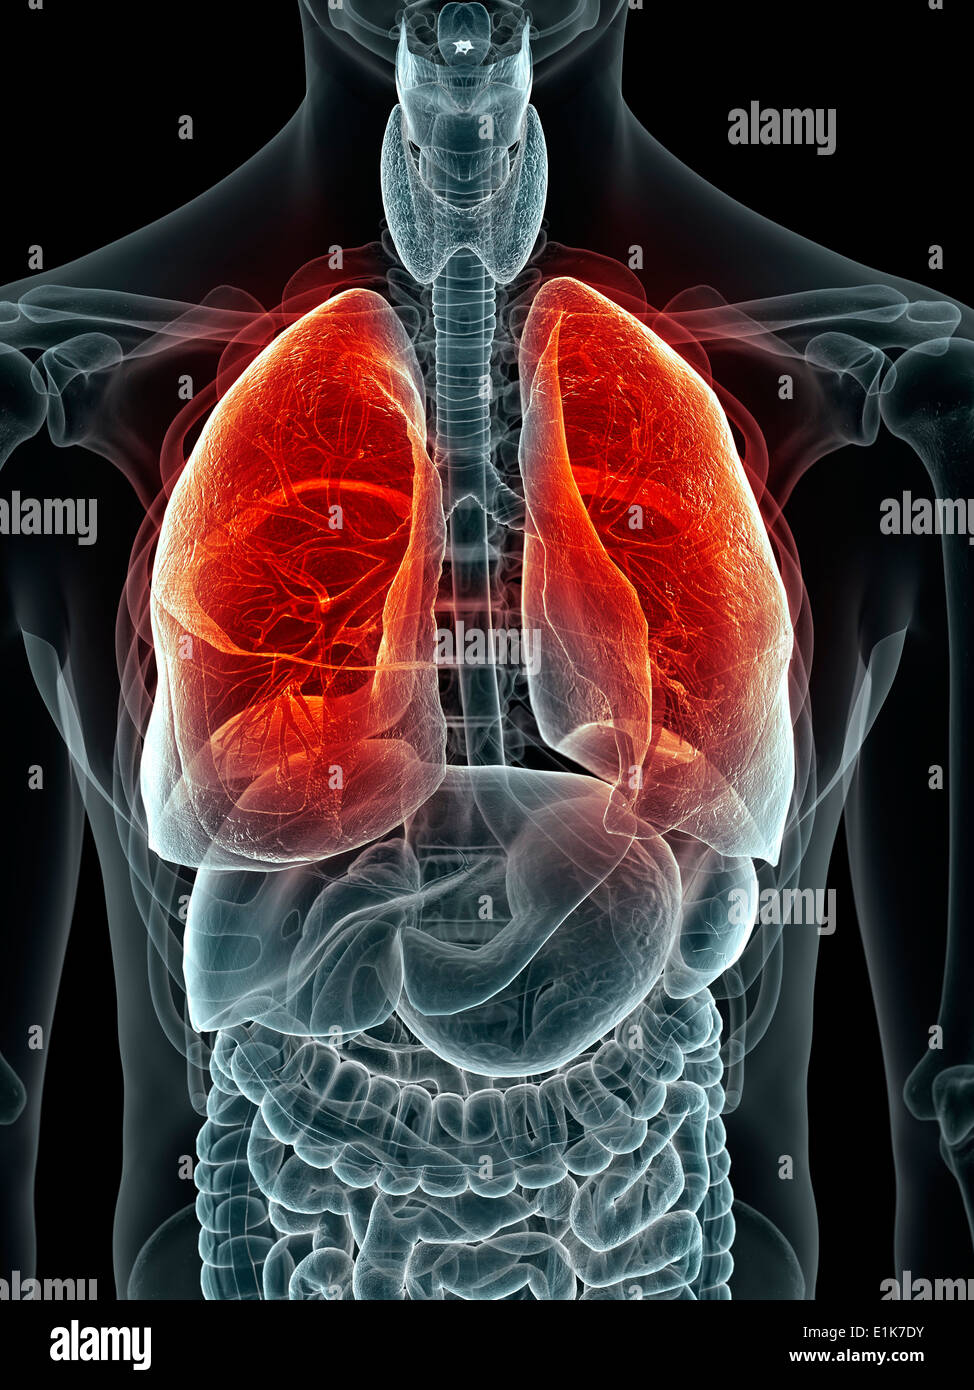 Human lungs computer artwork. Stock Photo